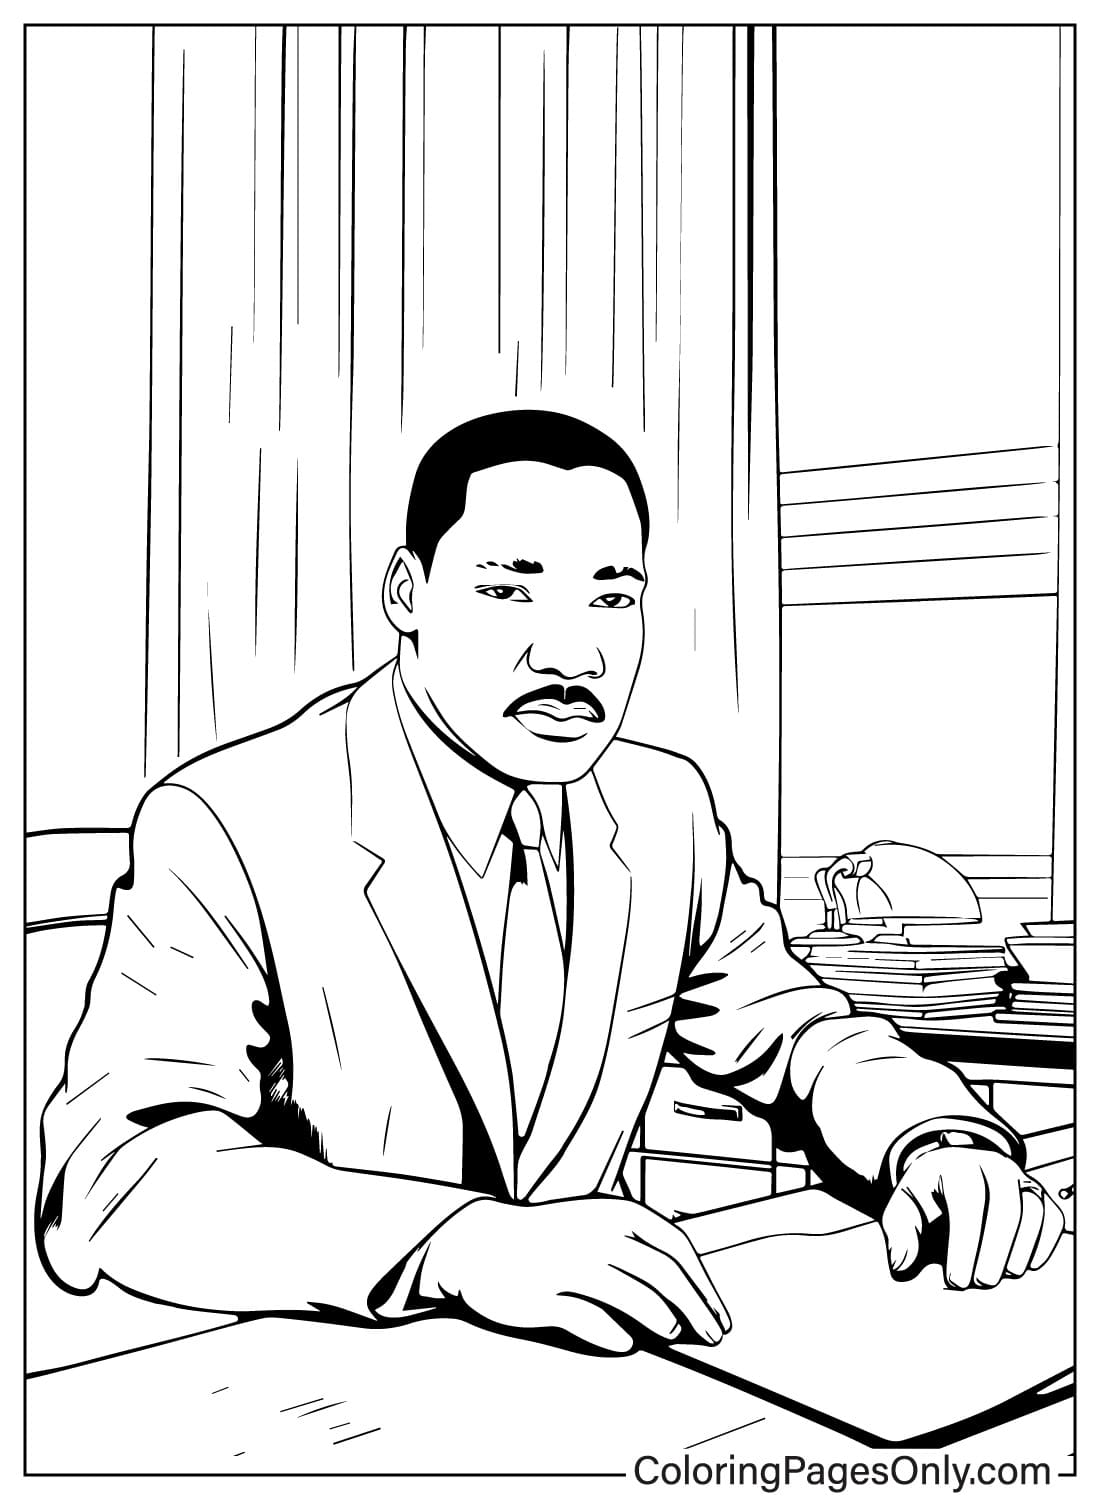 Página para colorear de Martin Luther King Jr de Martin Luther King Jr.